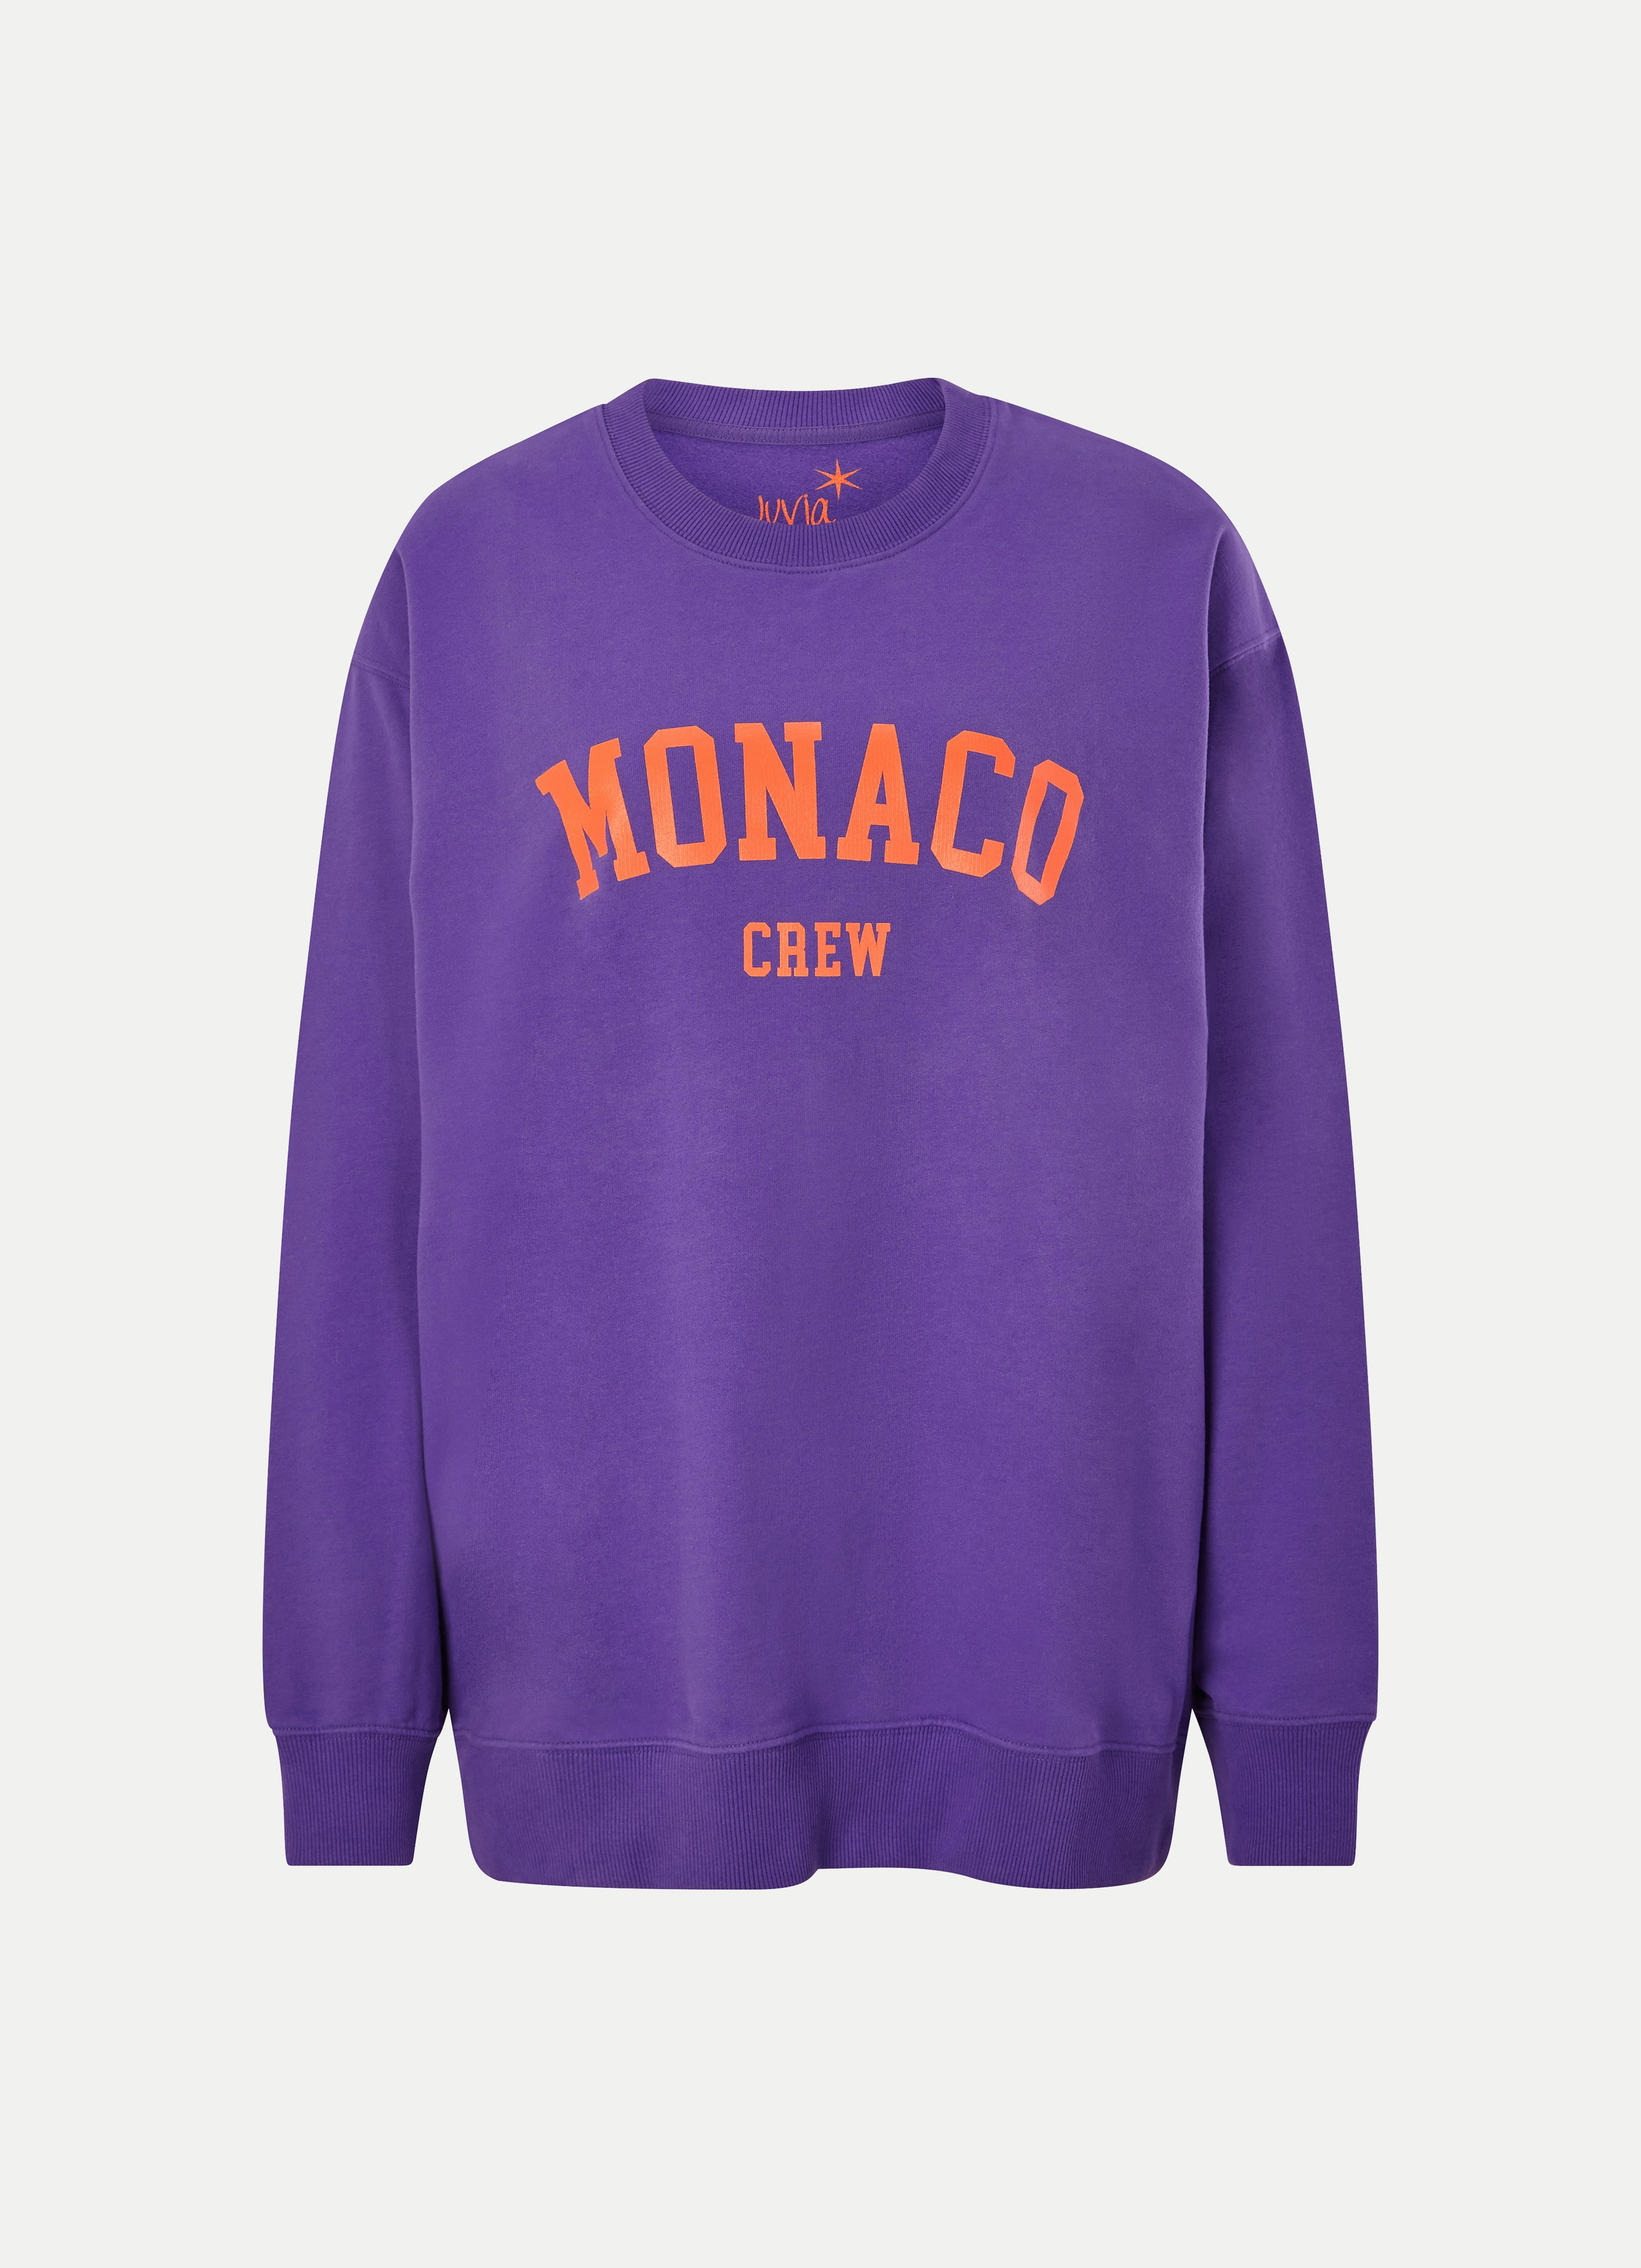 farbig unisex MONACO Sweatshirt Shirt Pulli Sweat-Shirt Pullover Sweat 